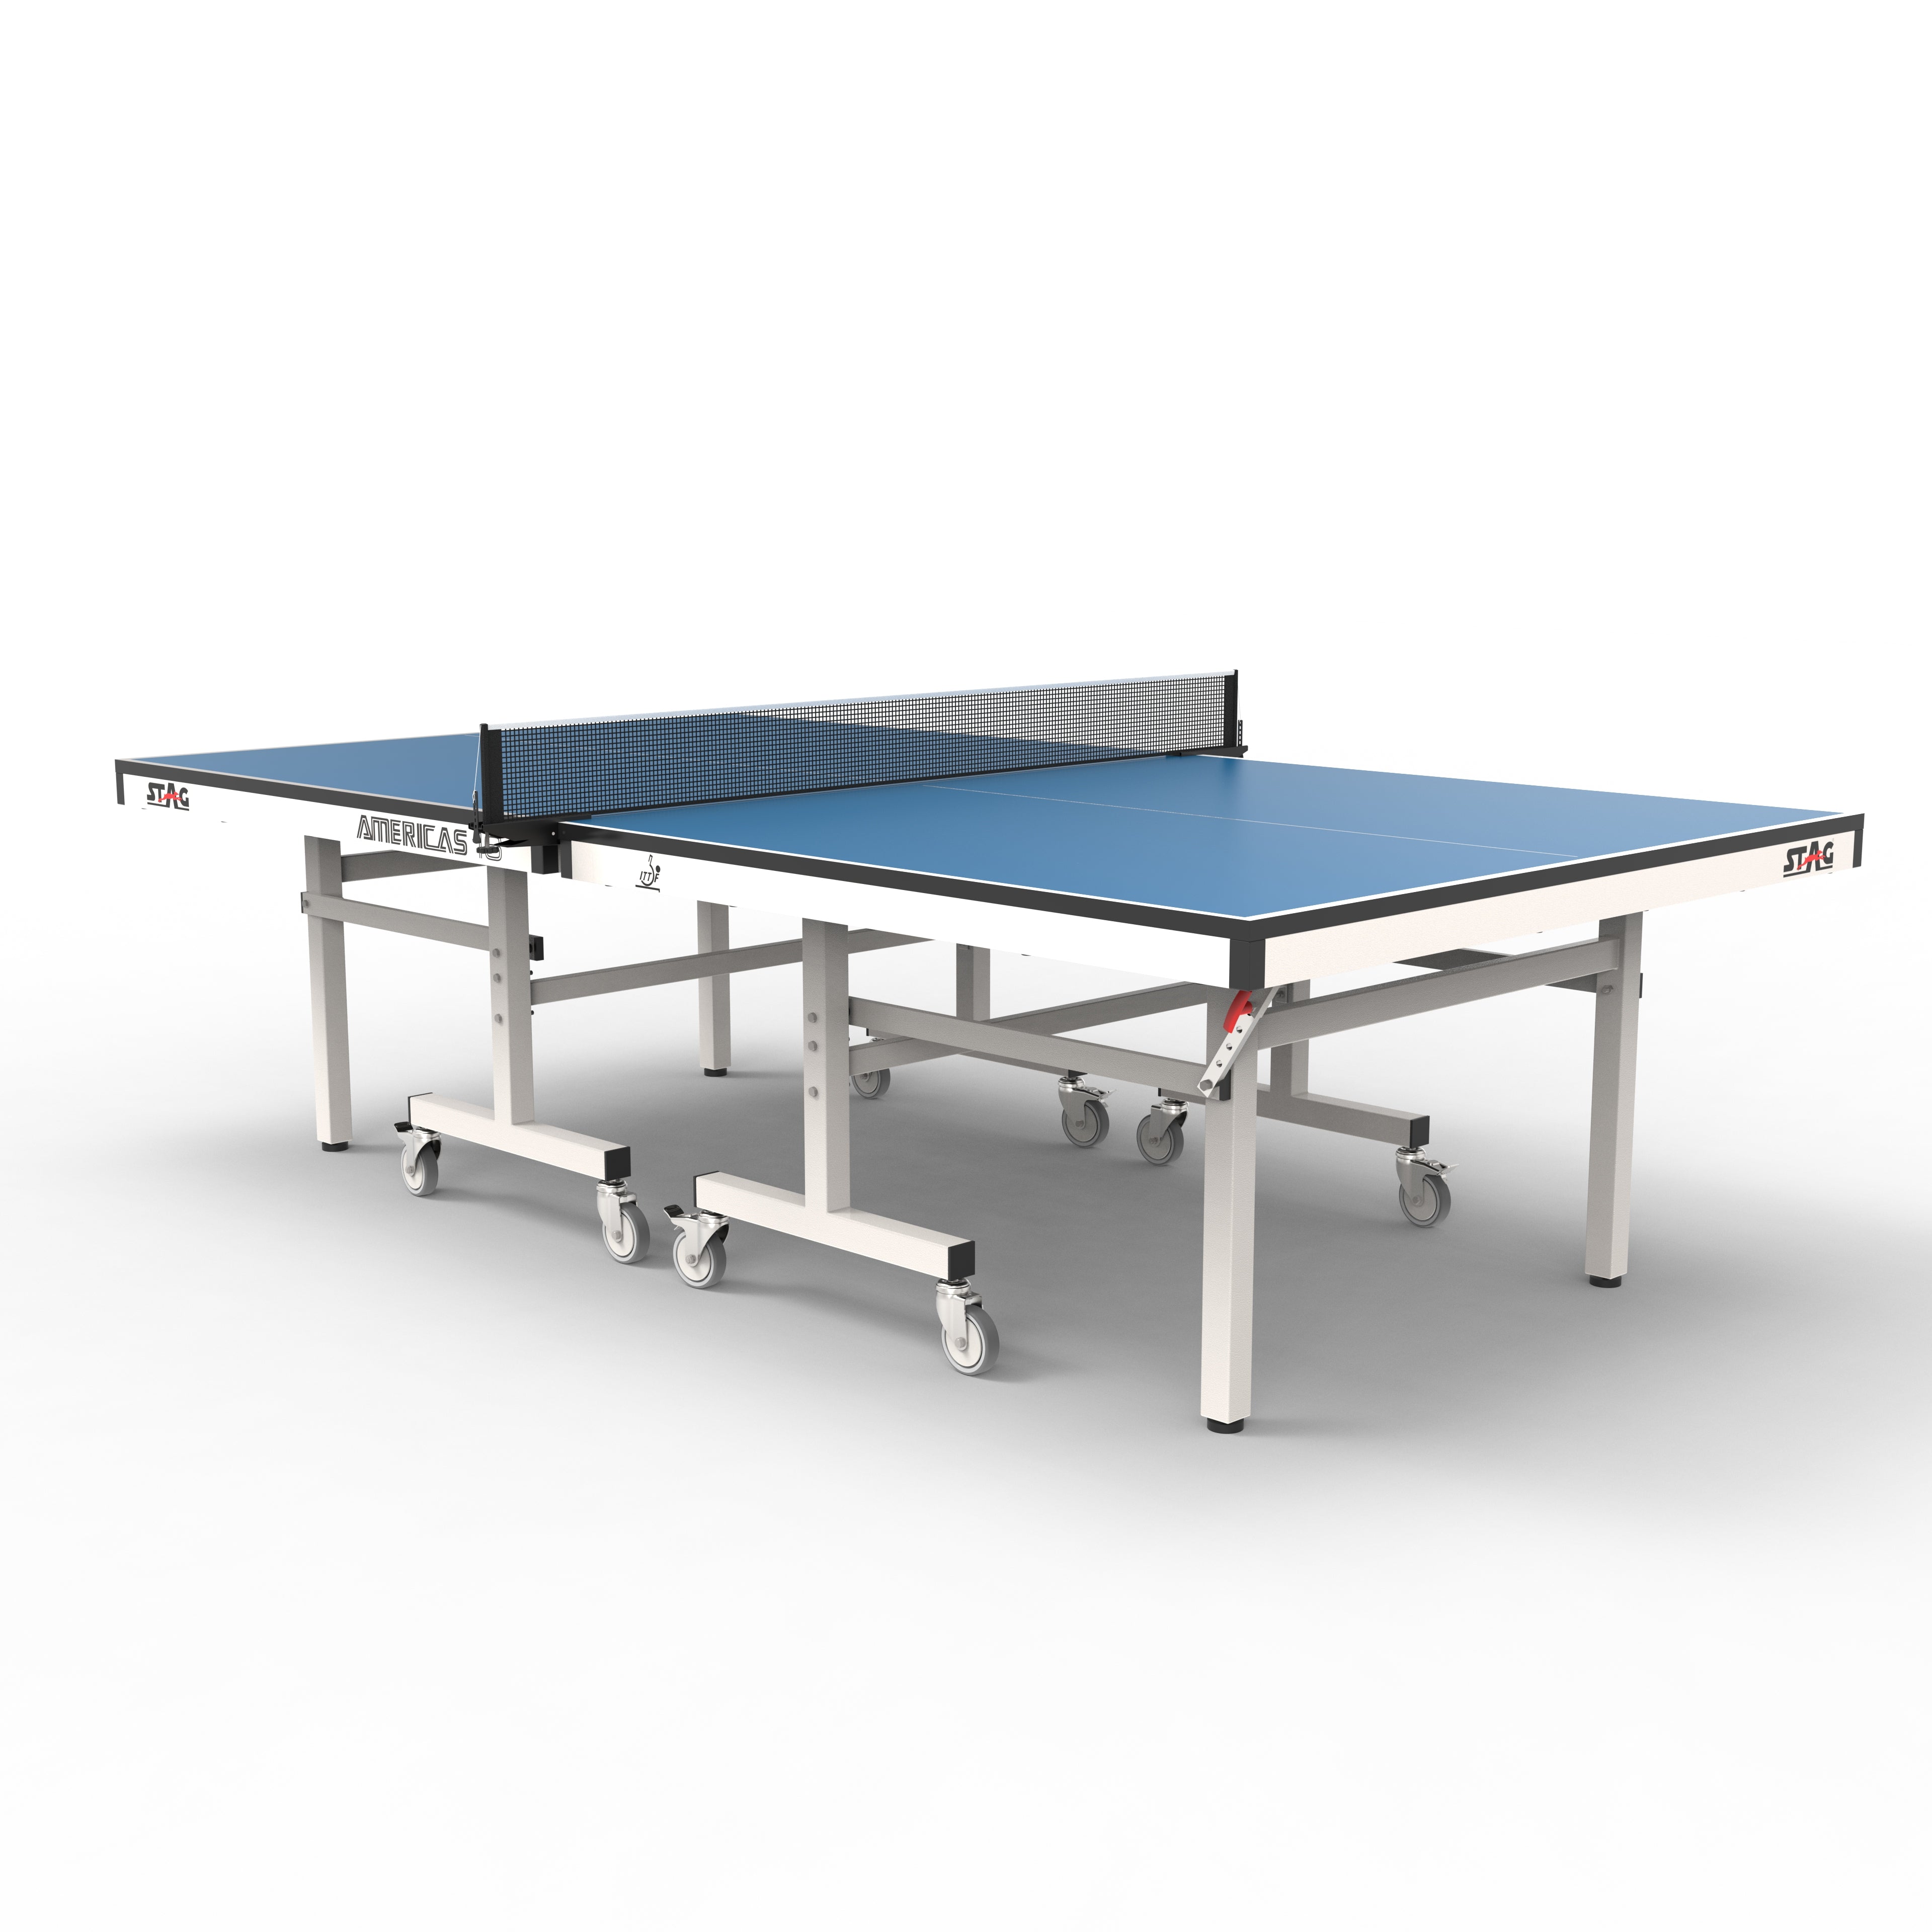 Americas Table Tennis Table